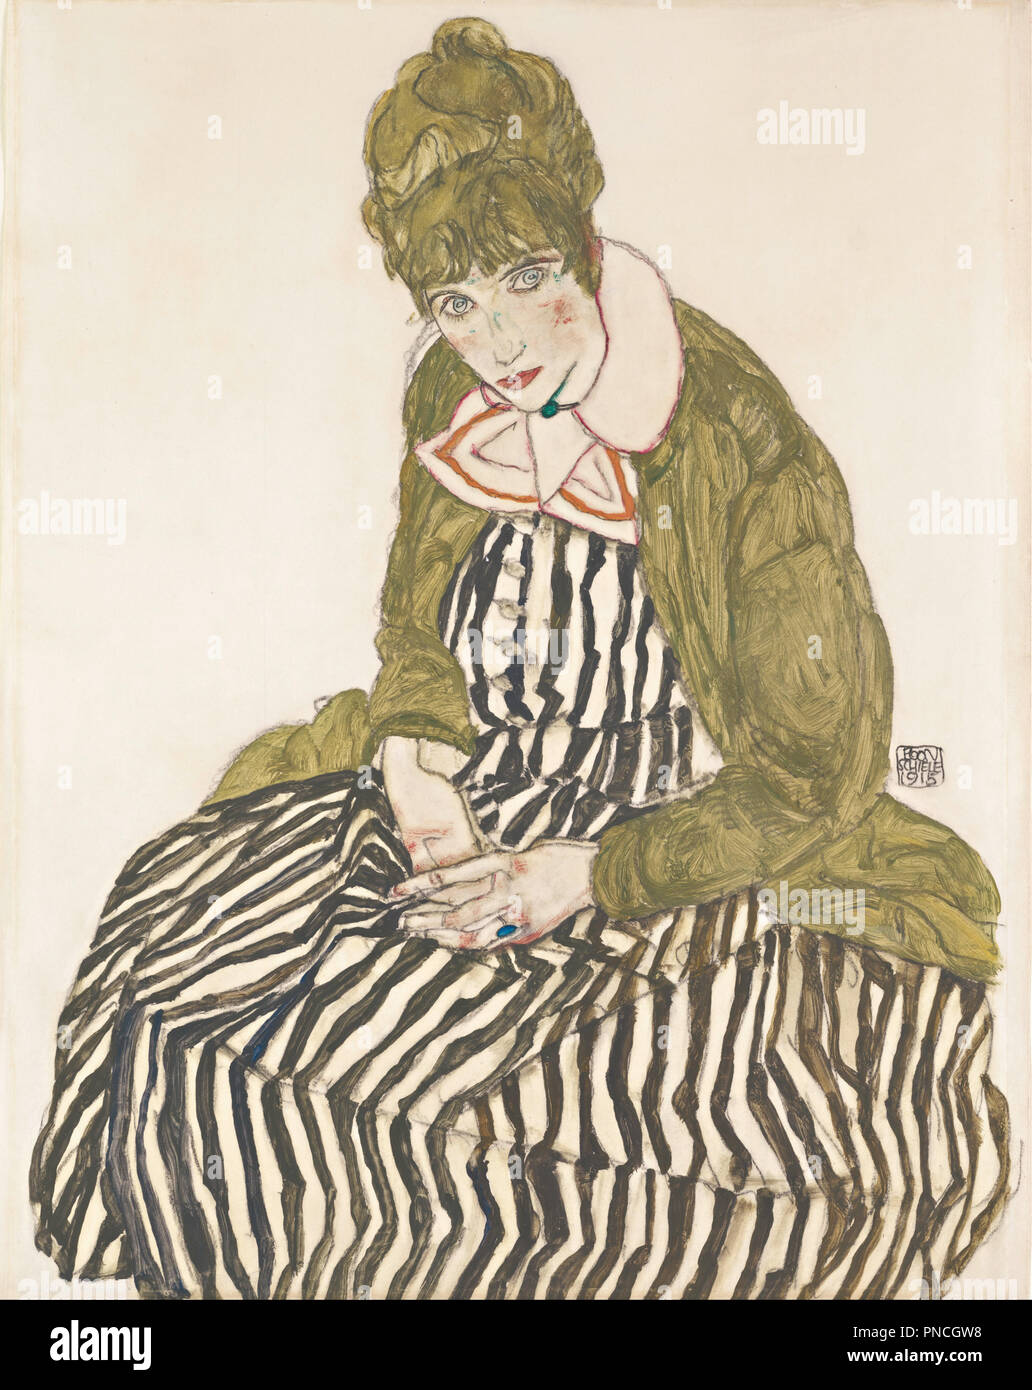 Edith Schiele in gestreiftem Kleid, sitzend Edith with Striped Dress, Sitting. Date/Period: 1915. Drawing. Height: 508 mm (20 in); Width: 402 mm (15.82 in). Stock Photo